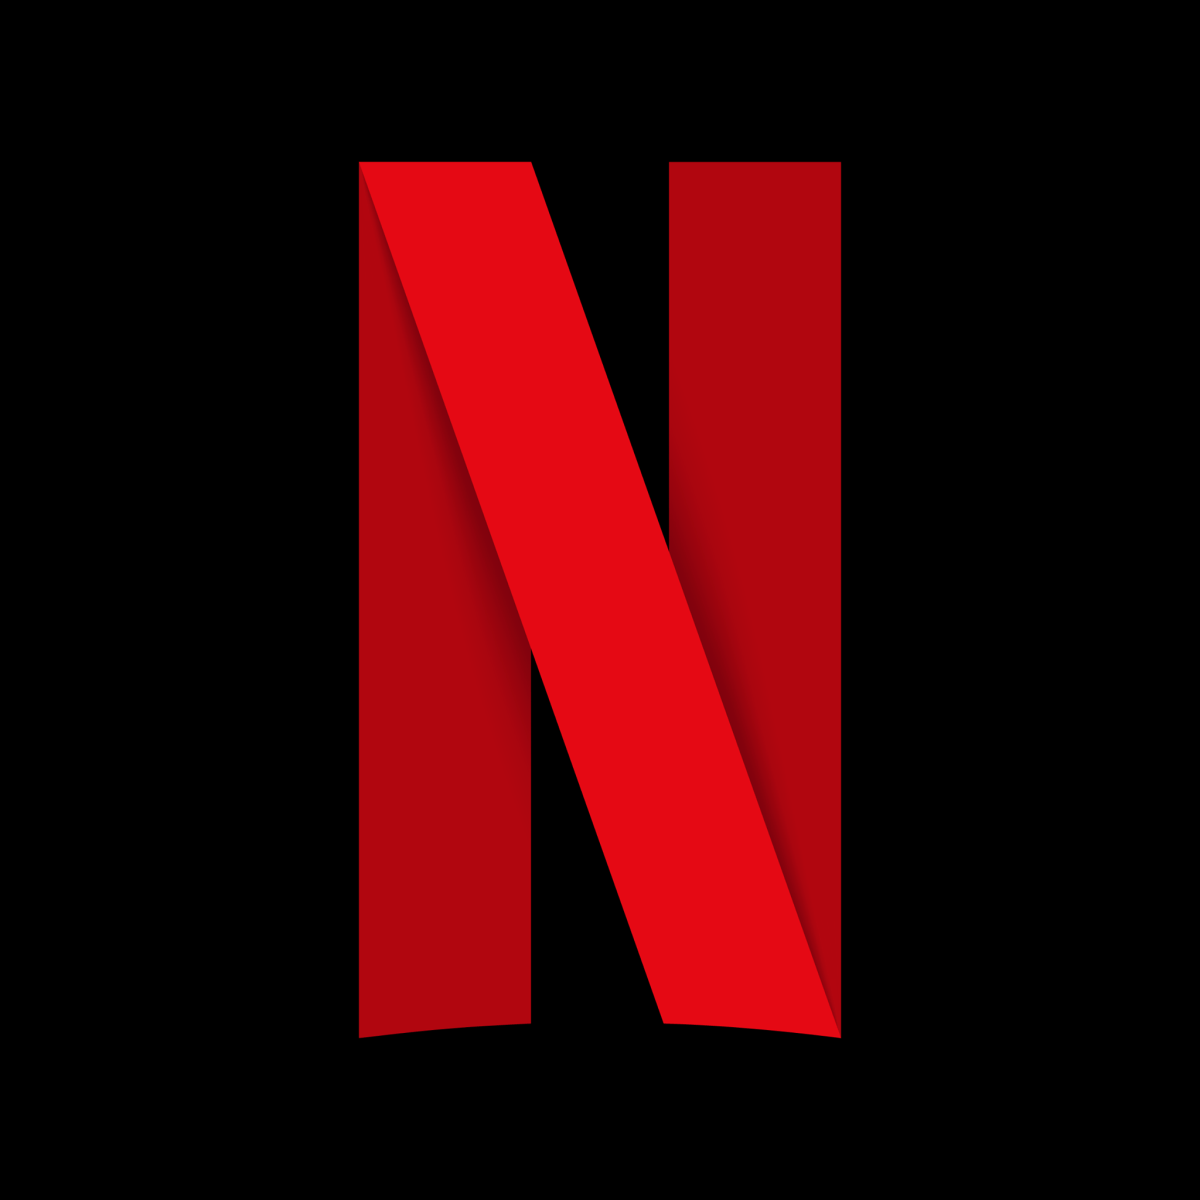 Nrtflixs Logo - Netflix made a new logo that's designed for mobile devices | VentureBeat